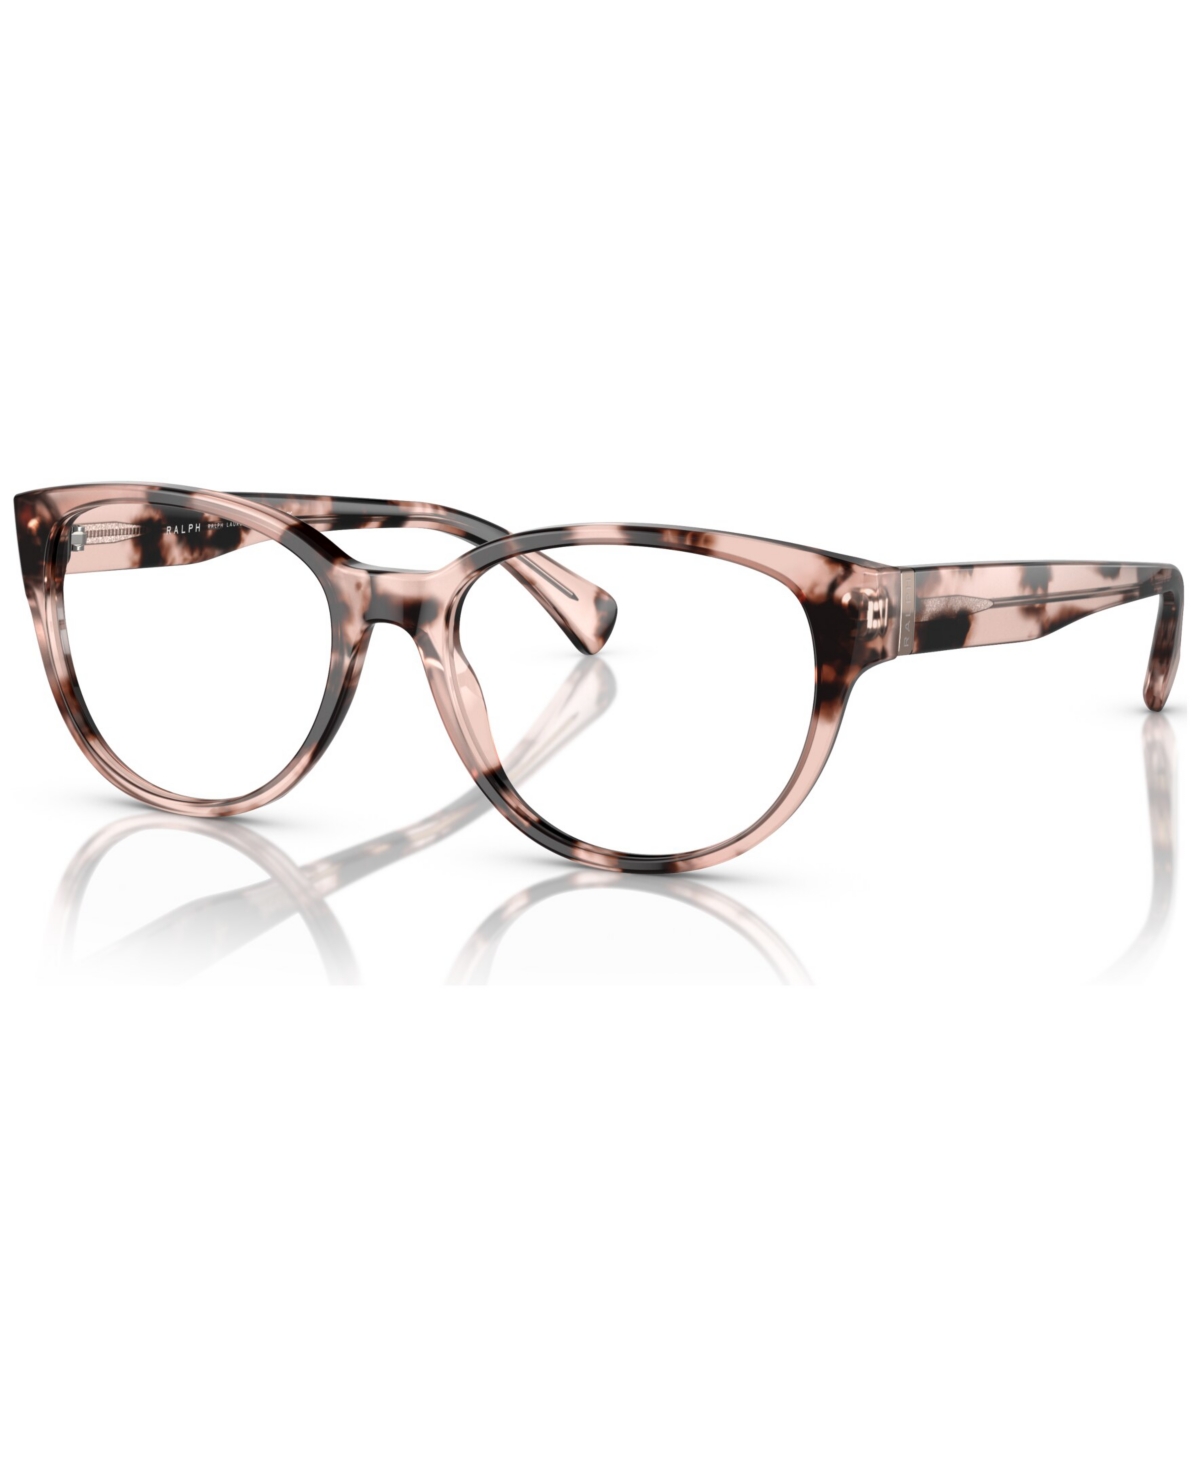 Women's Oval Eyeglasses, RA7151 52 - Shiny Rose Havana